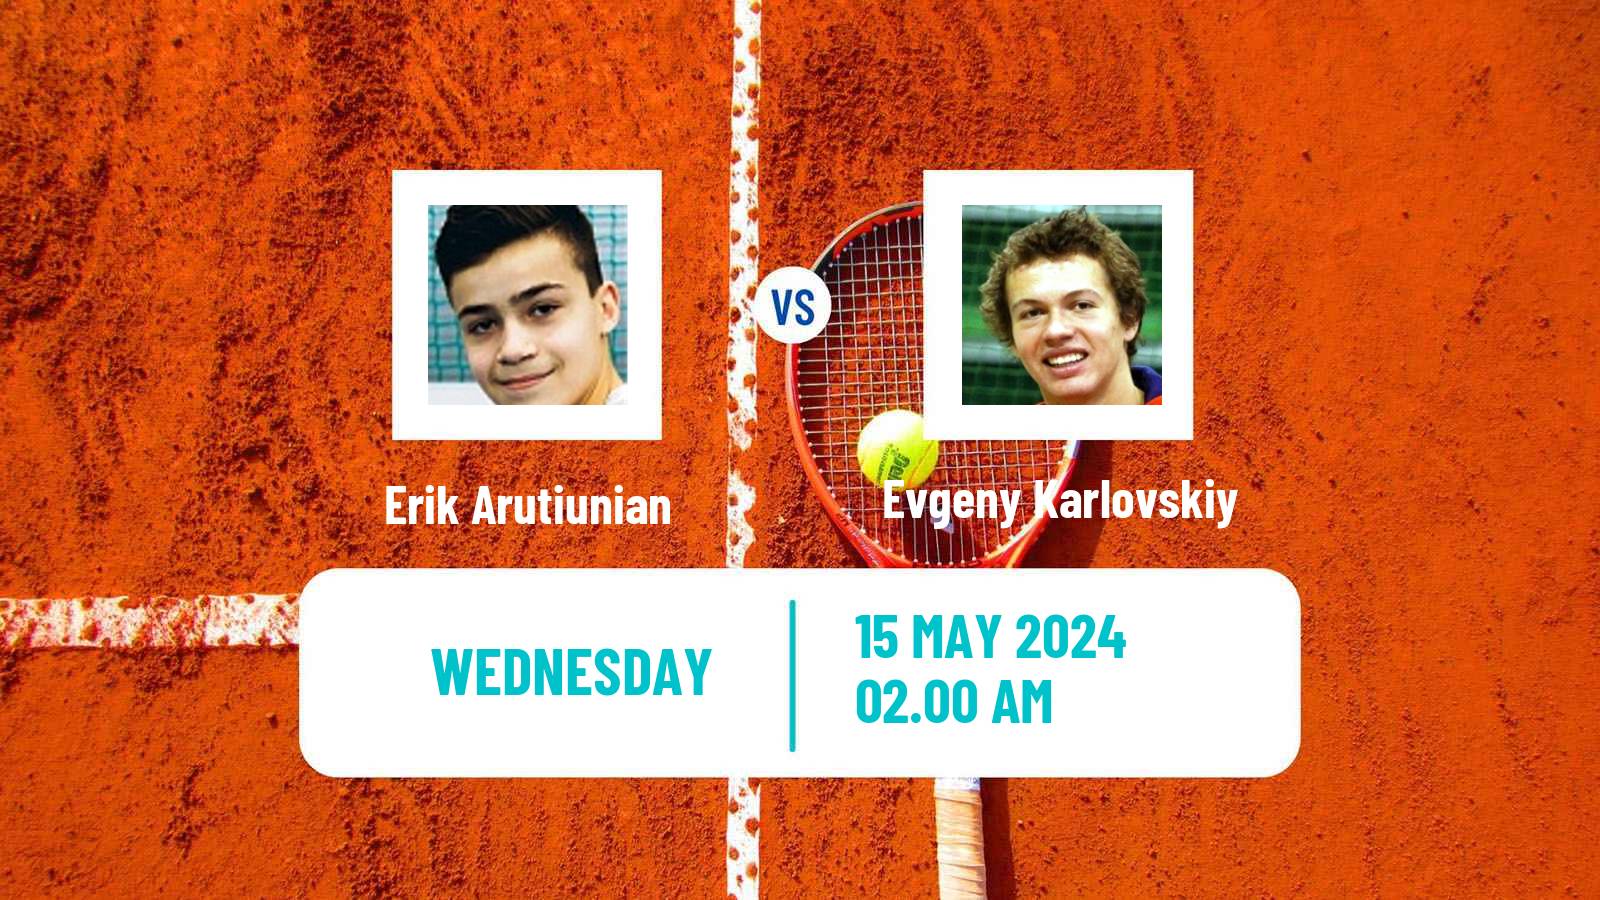 Tennis ITF M25 Kachreti Men Erik Arutiunian - Evgeny Karlovskiy